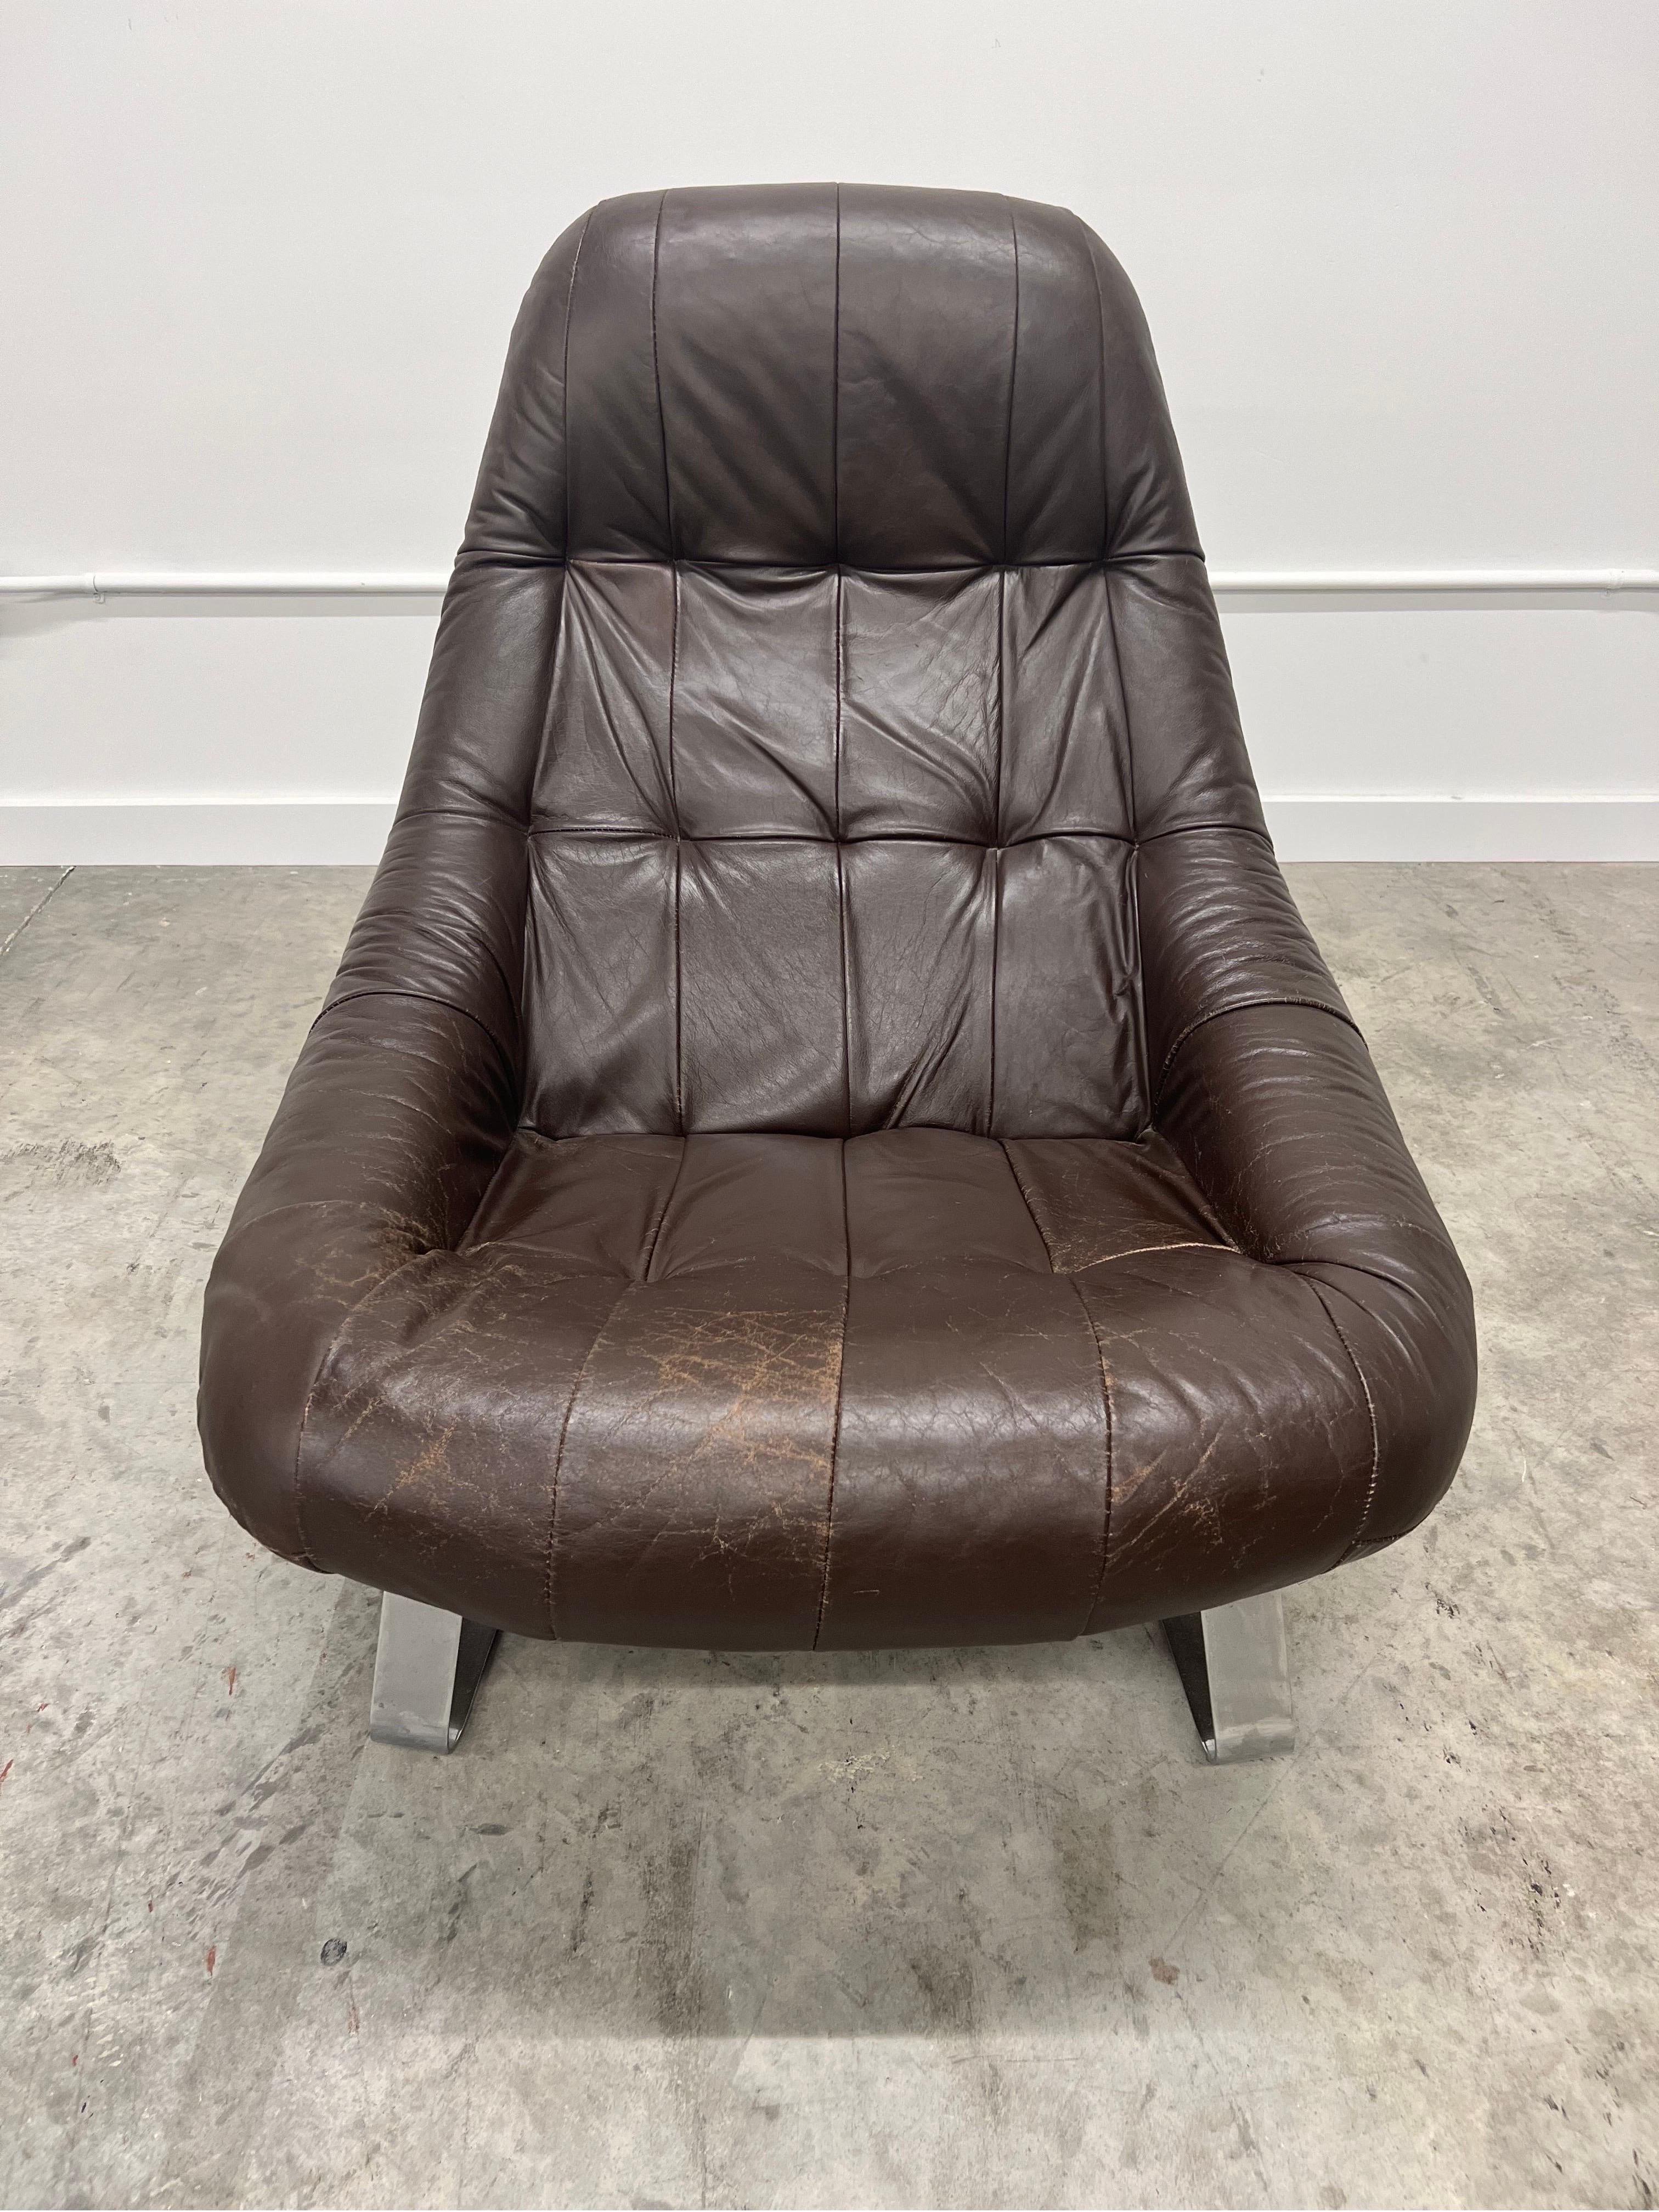 Brazilian Mid-Century Modern Percival Lafer “Earth Lounge” Chair